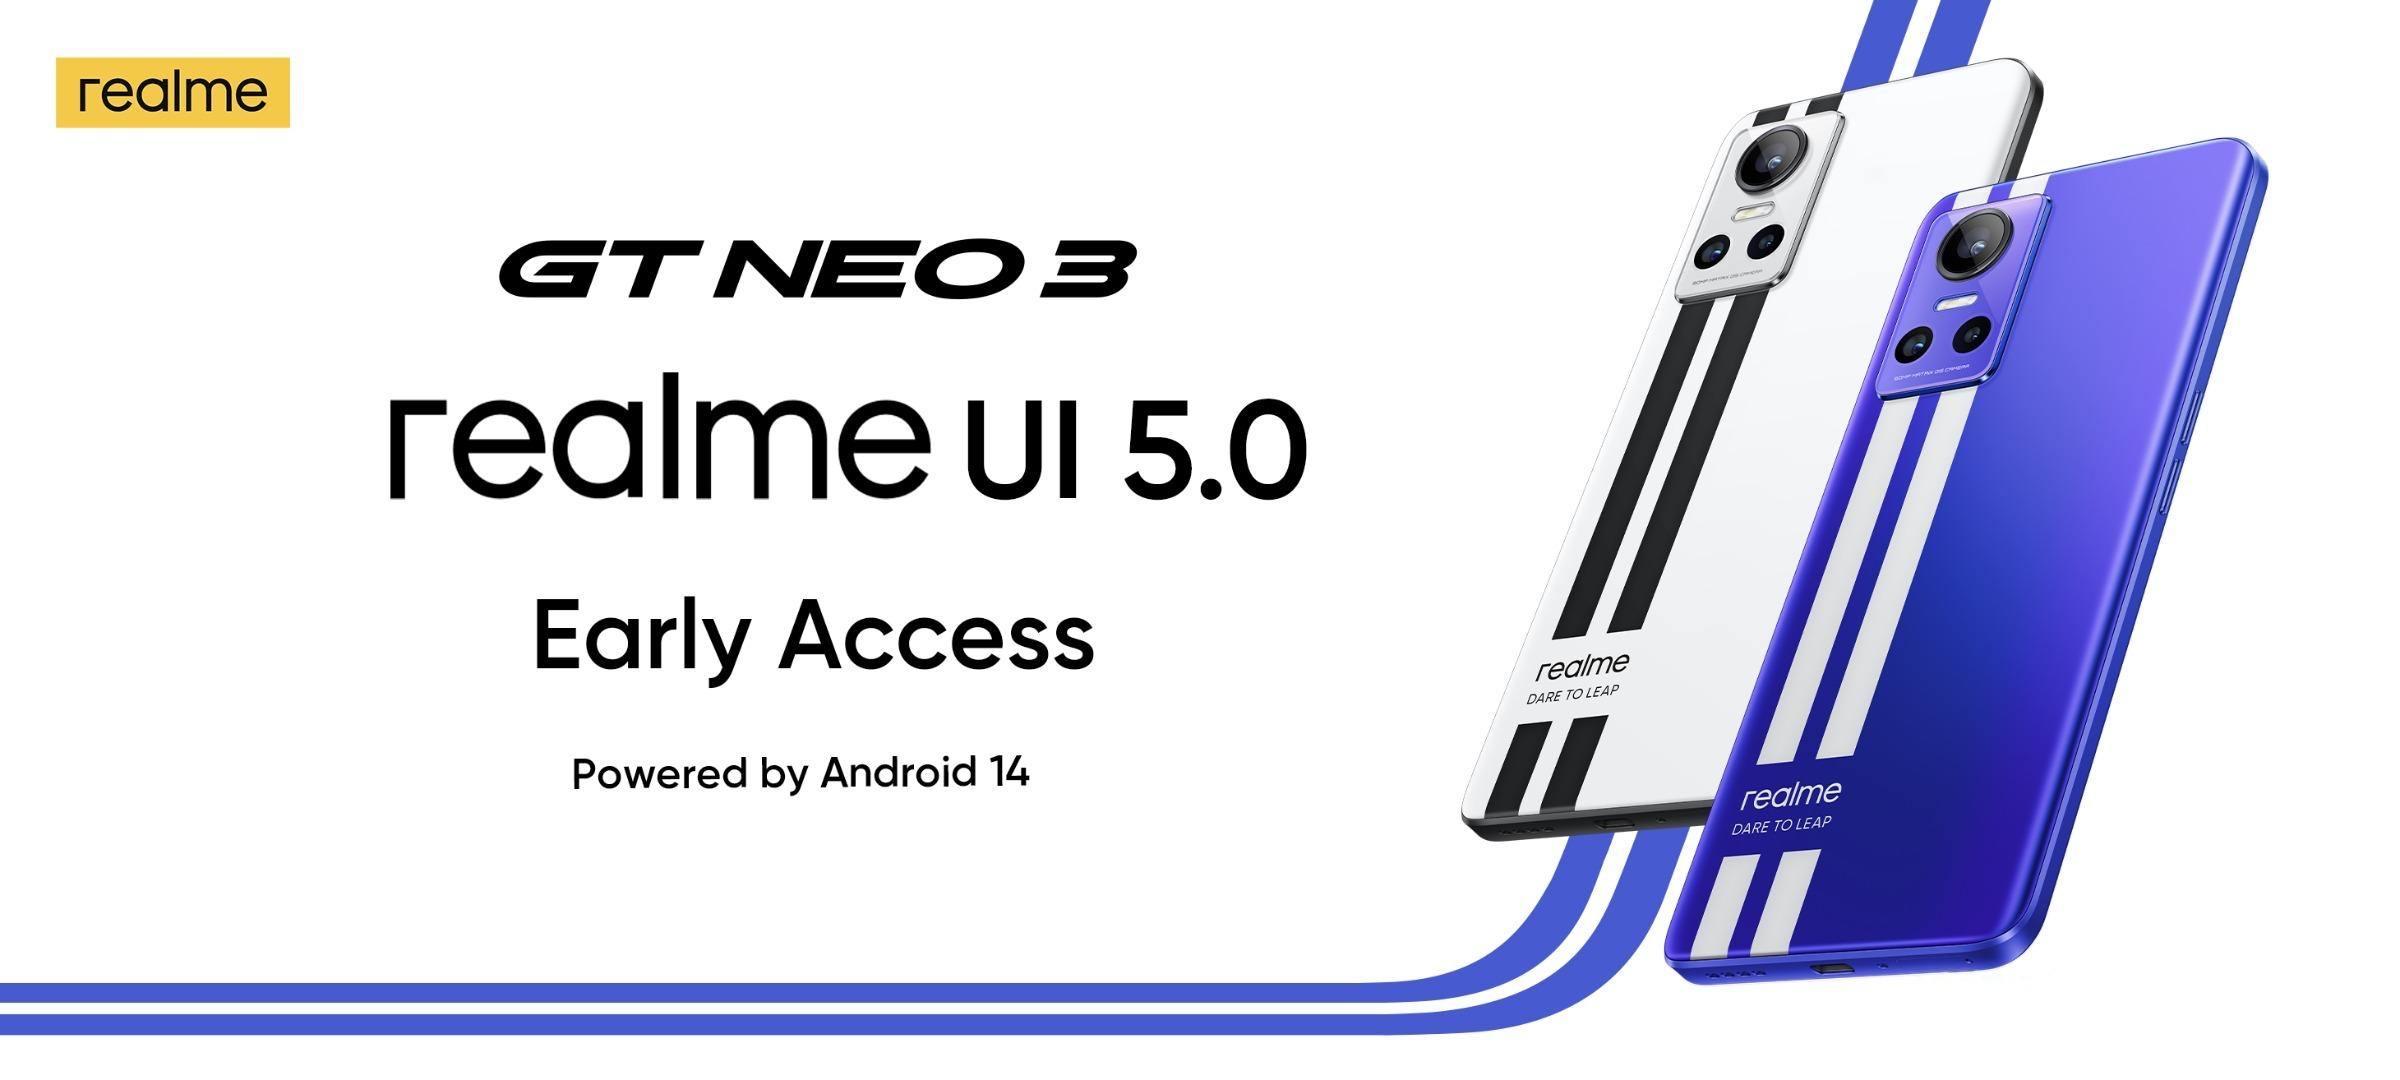 realme ogłosiło program testowy realme UI 5.0 oparty na systemie Android 14 dla realme GT Neo 3 i realme GT Neo 3 150W.